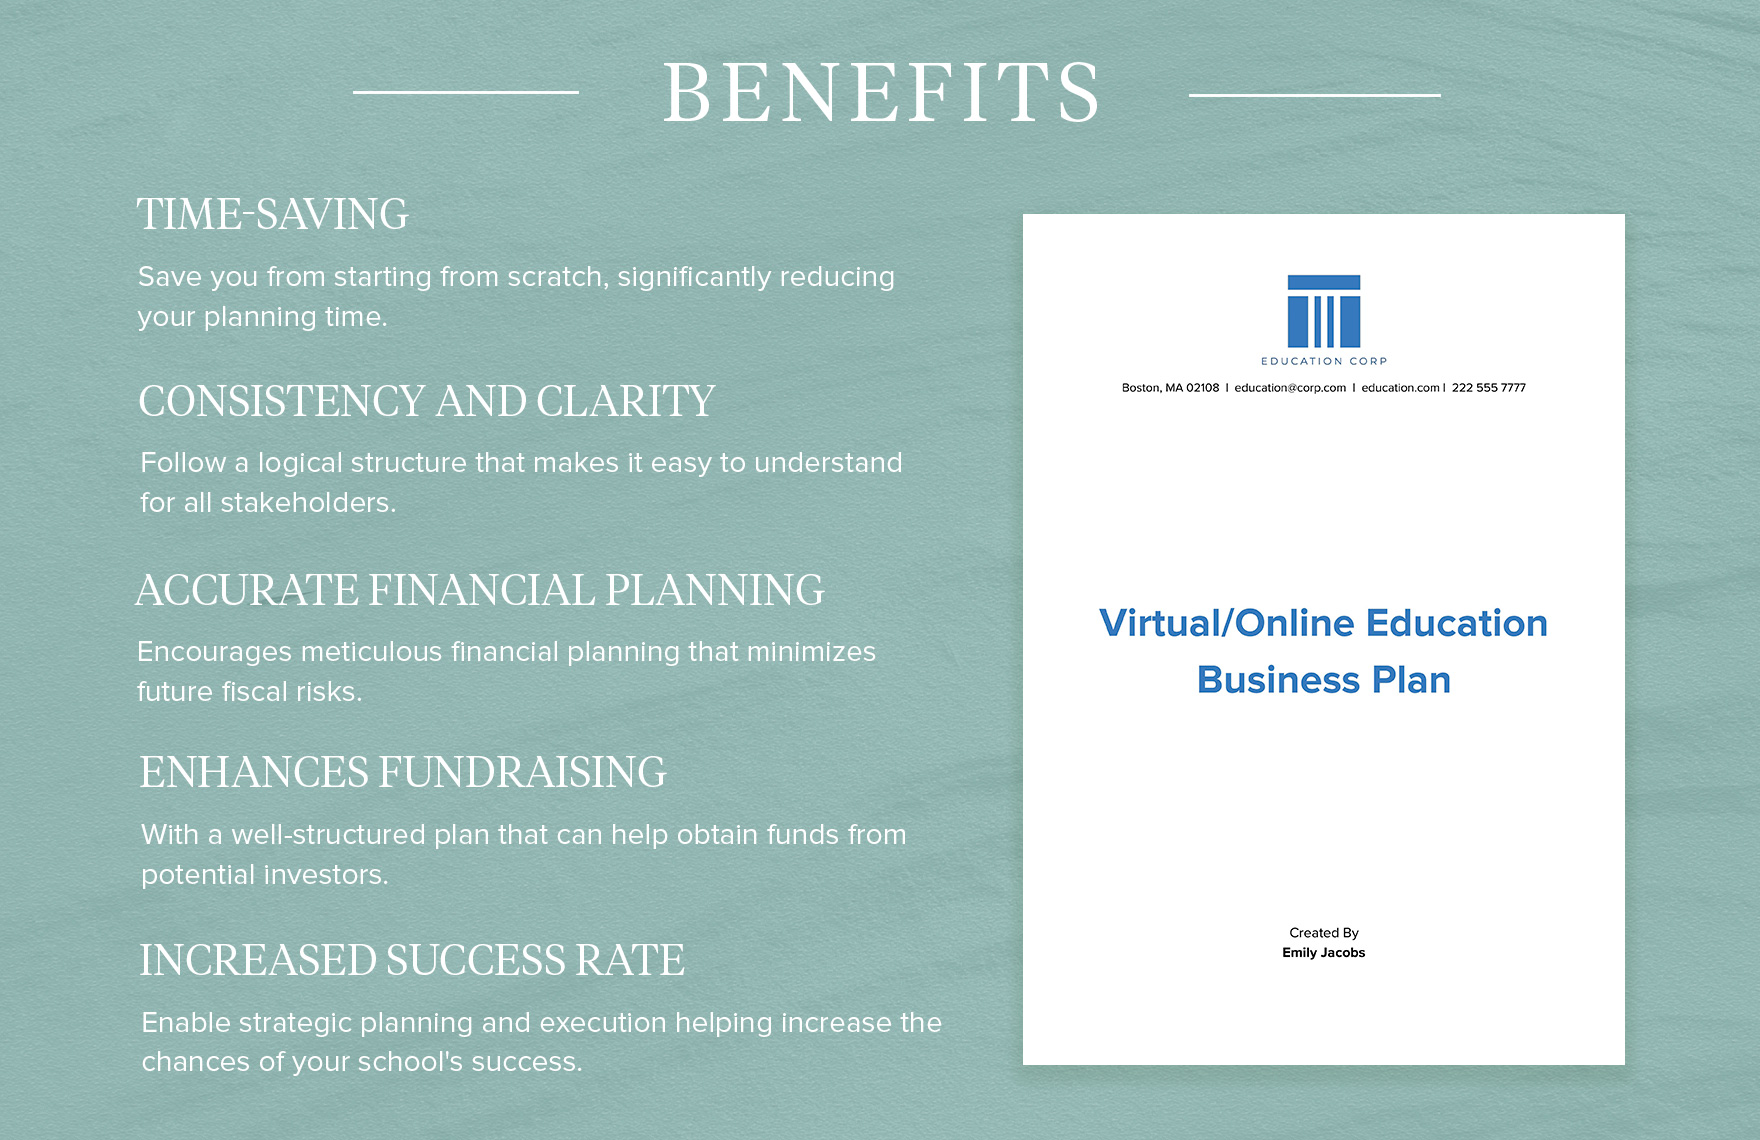 Virtual/Online Education Business Plan Template